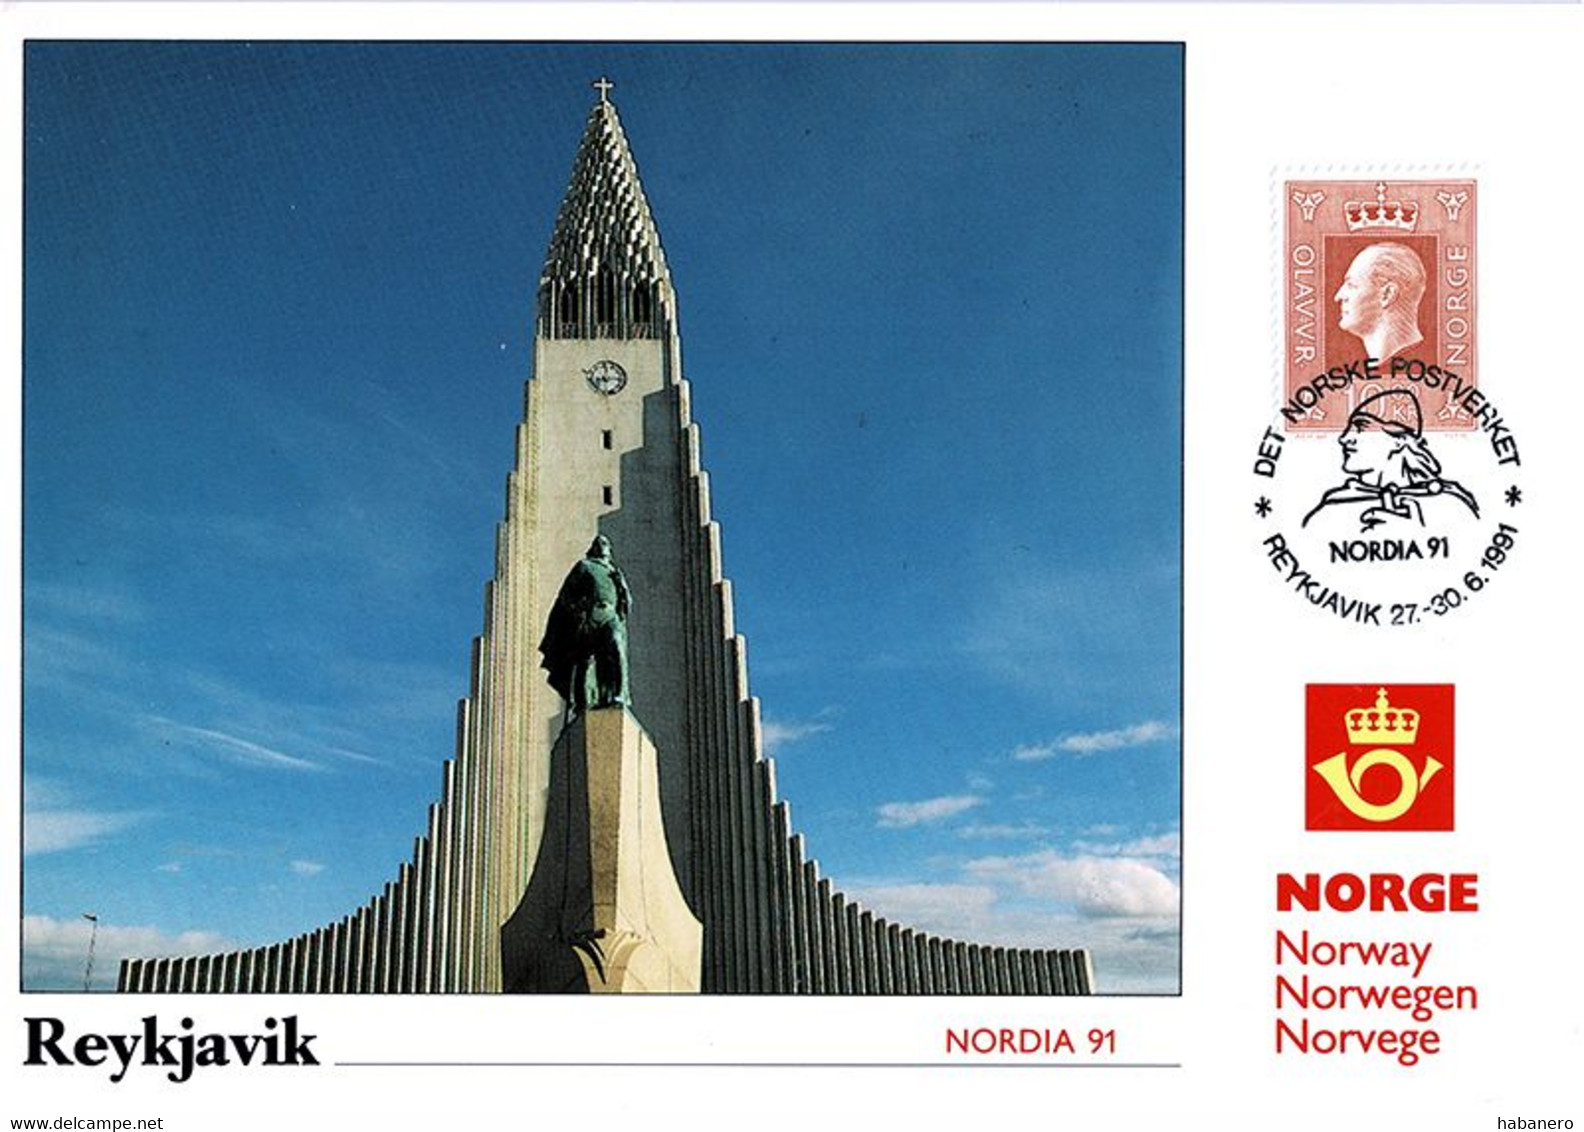 NORWAY 1991 PU82 NORDIA '91 REYKJAVIK EXHIBITION CARD - Cartes-maximum (CM)